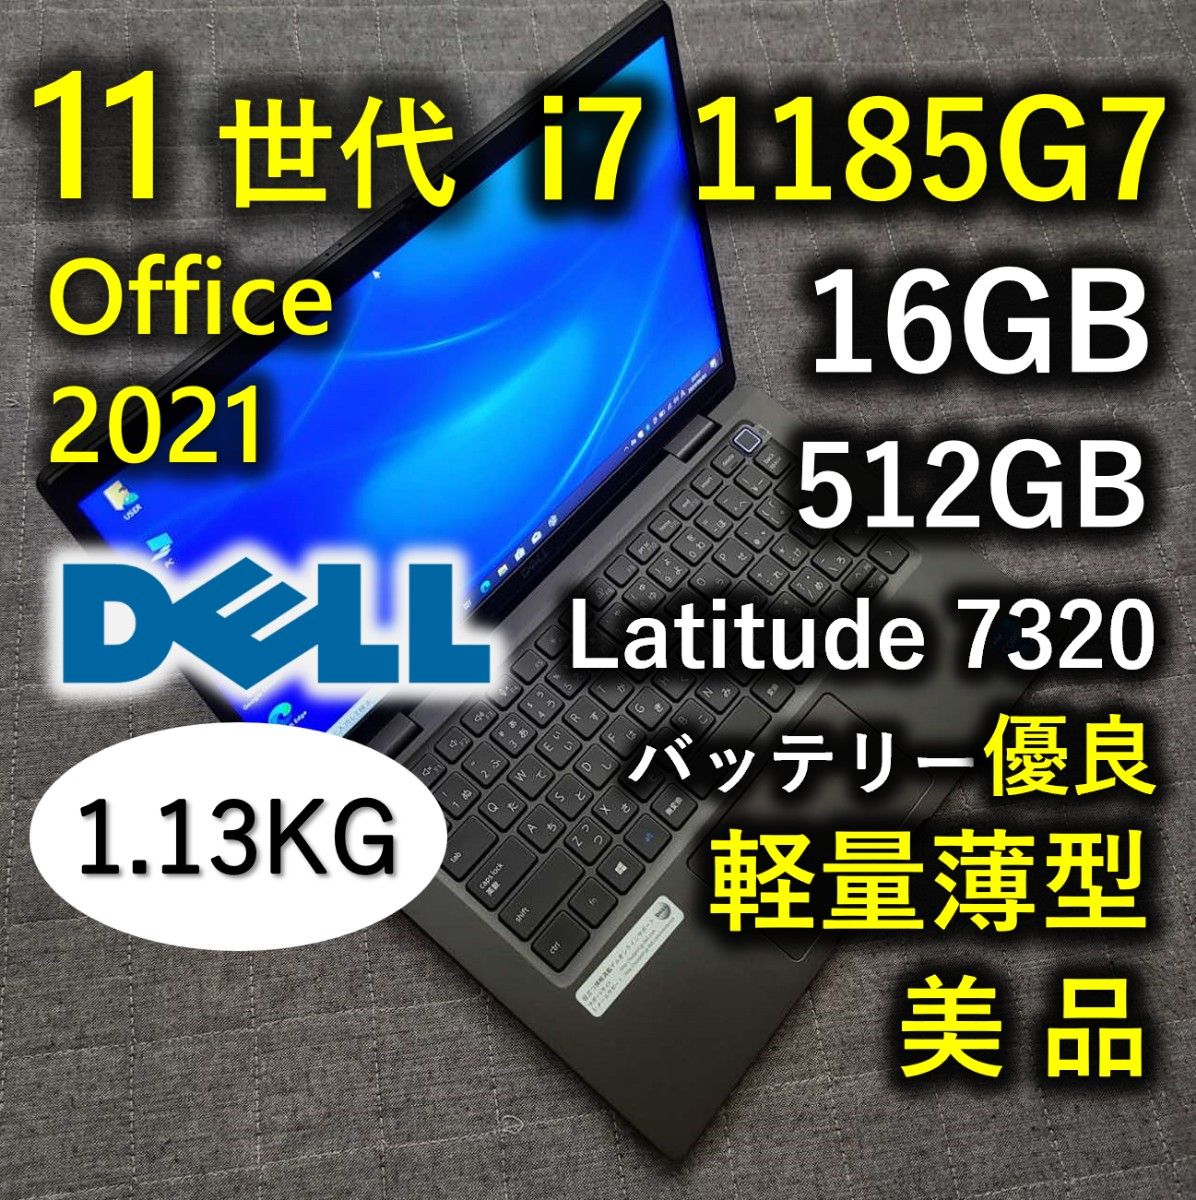 軽量薄型 美品 DELL 驚速 11世代i7 1185g7 16GB 512GB Latitude 7320